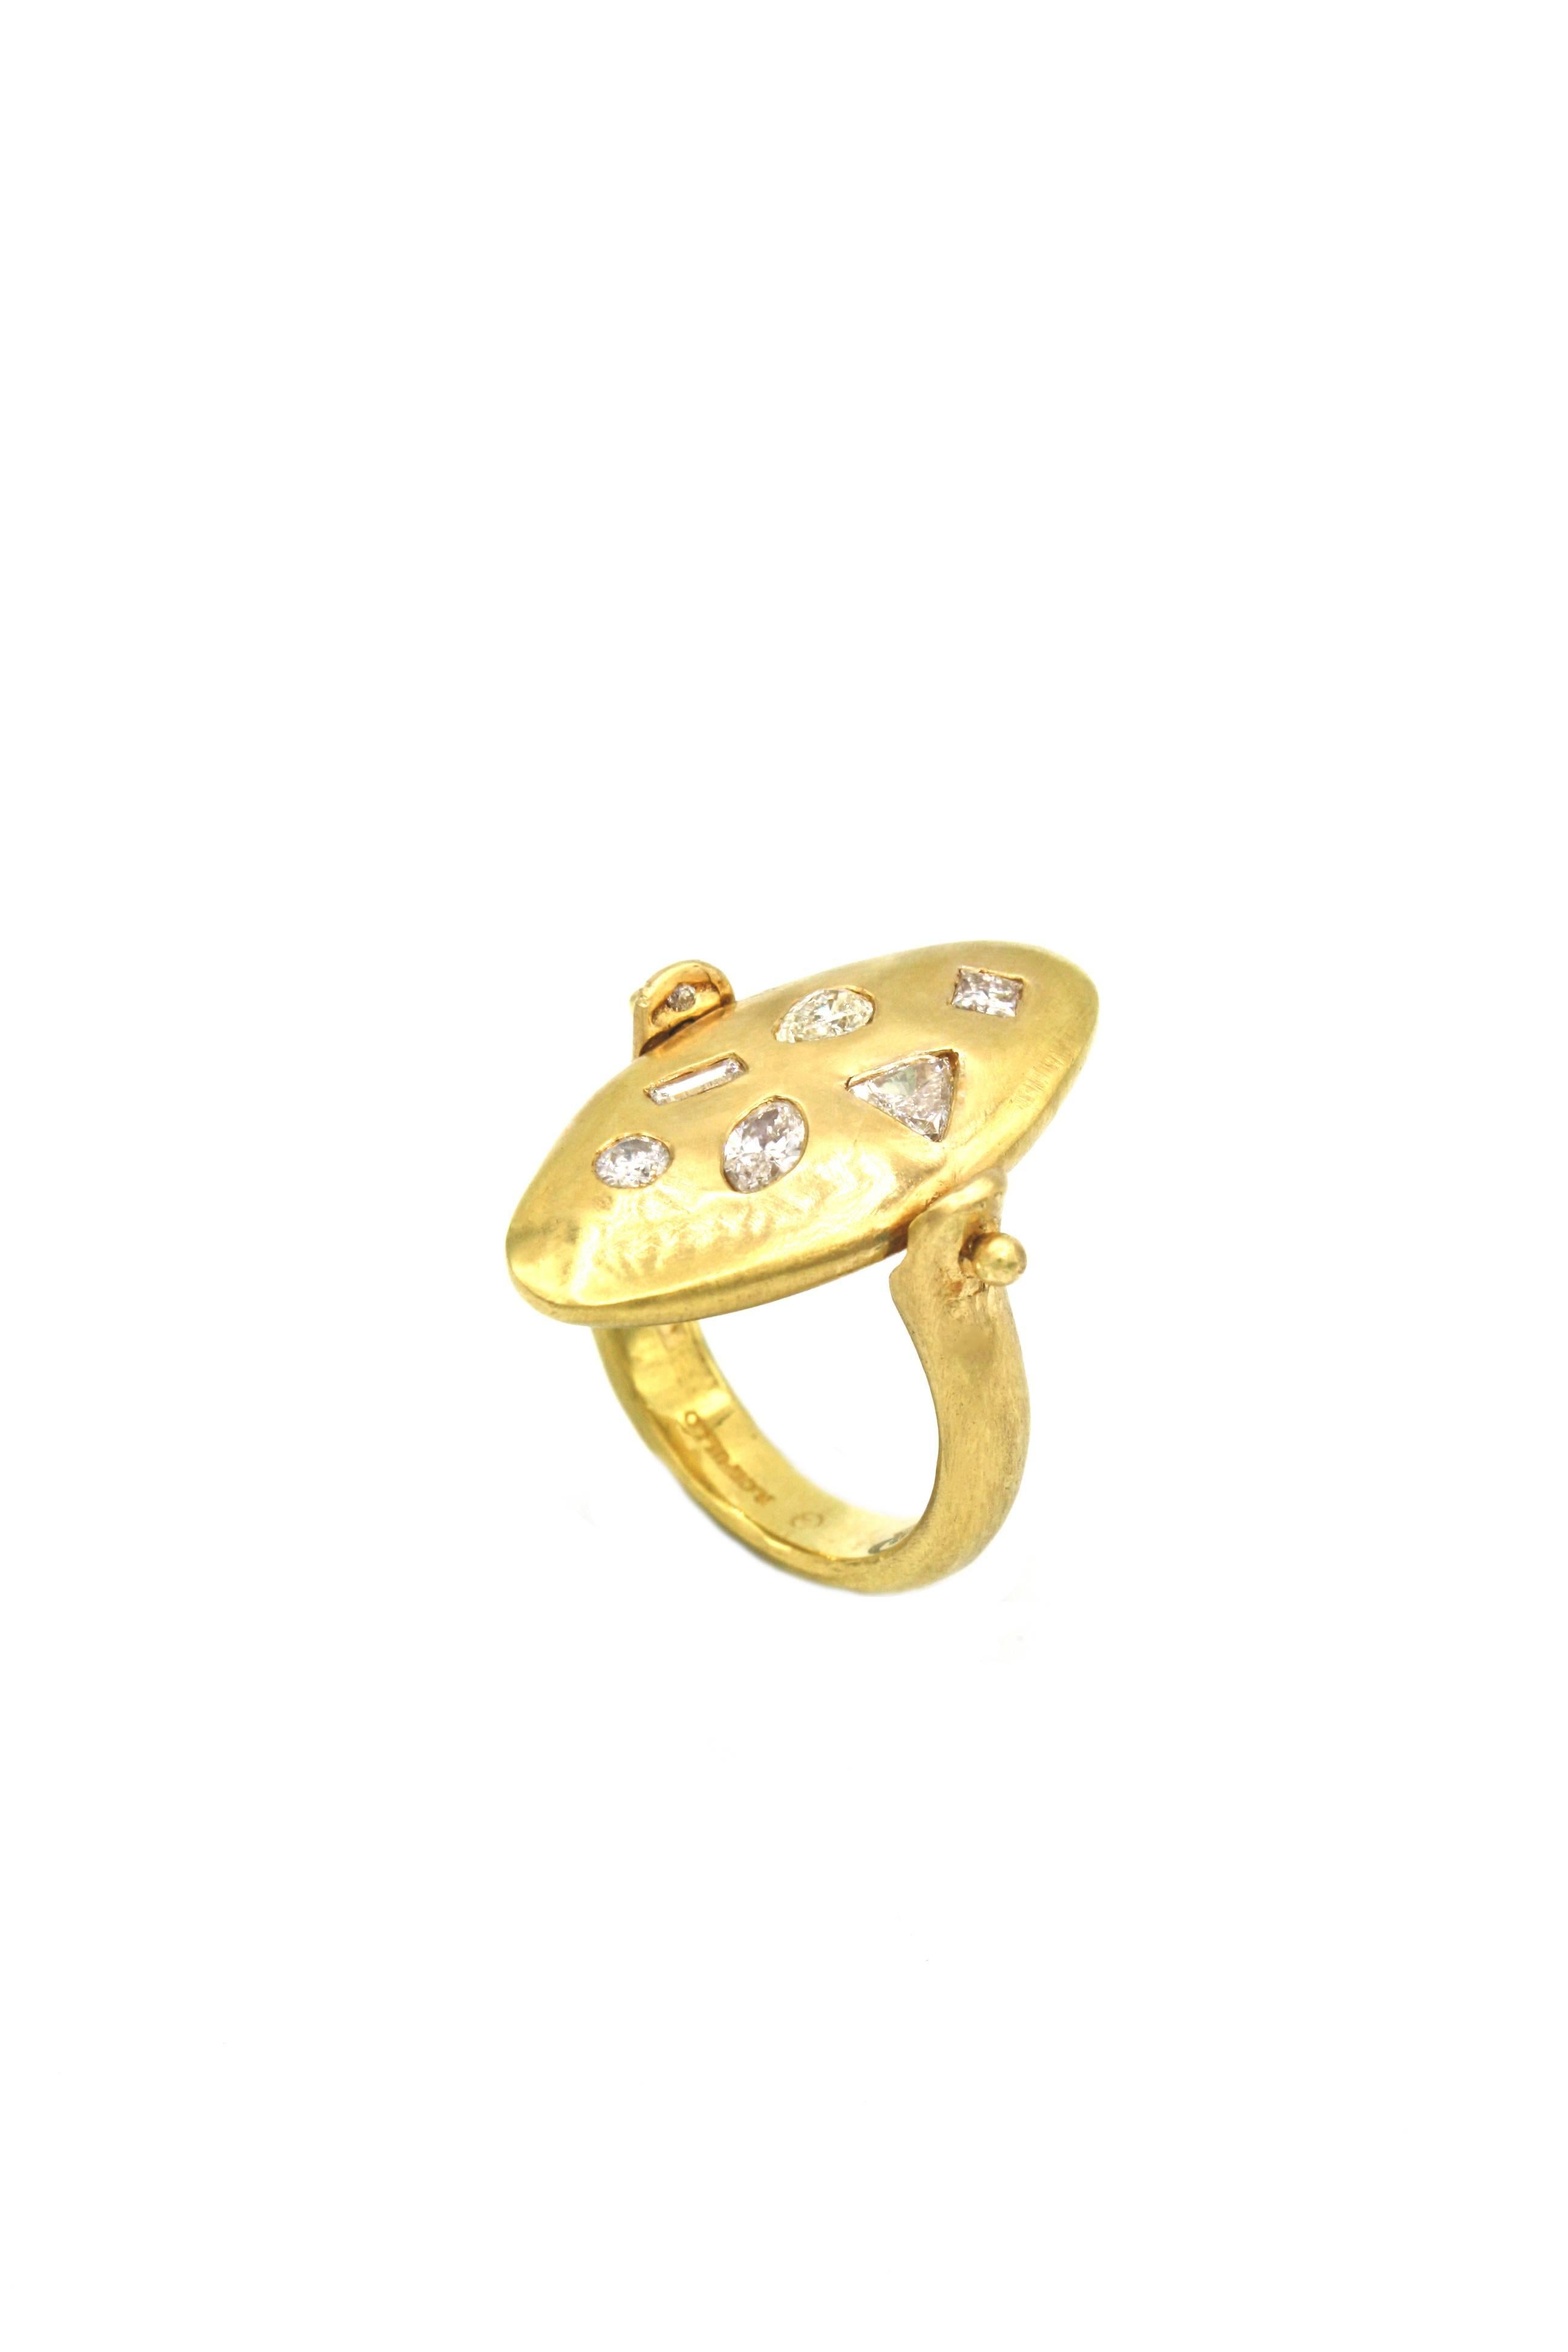 Renato Cipullo Multi Stone Gold Reversible Ring In New Condition For Sale In New York, NY